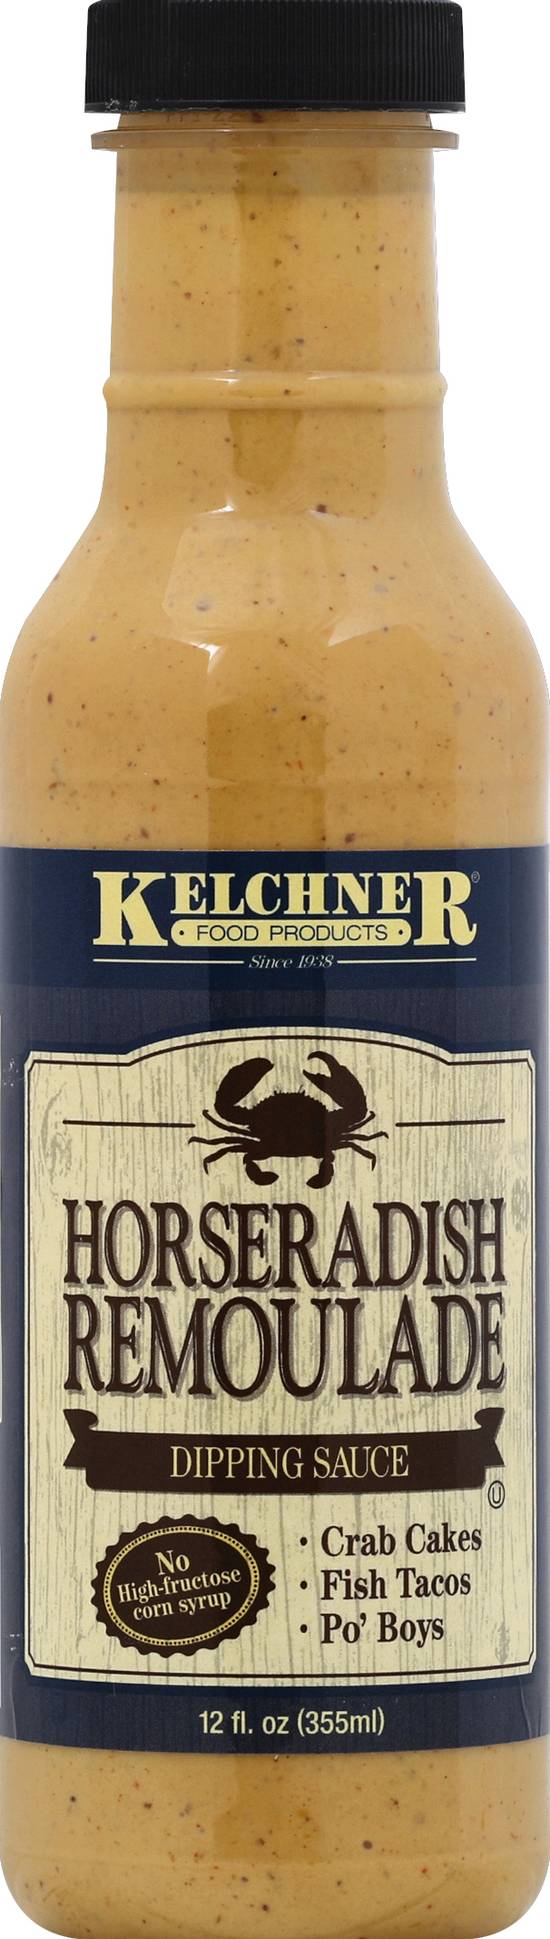 Kelchner Horseradish Remoulade Dipping Sauce